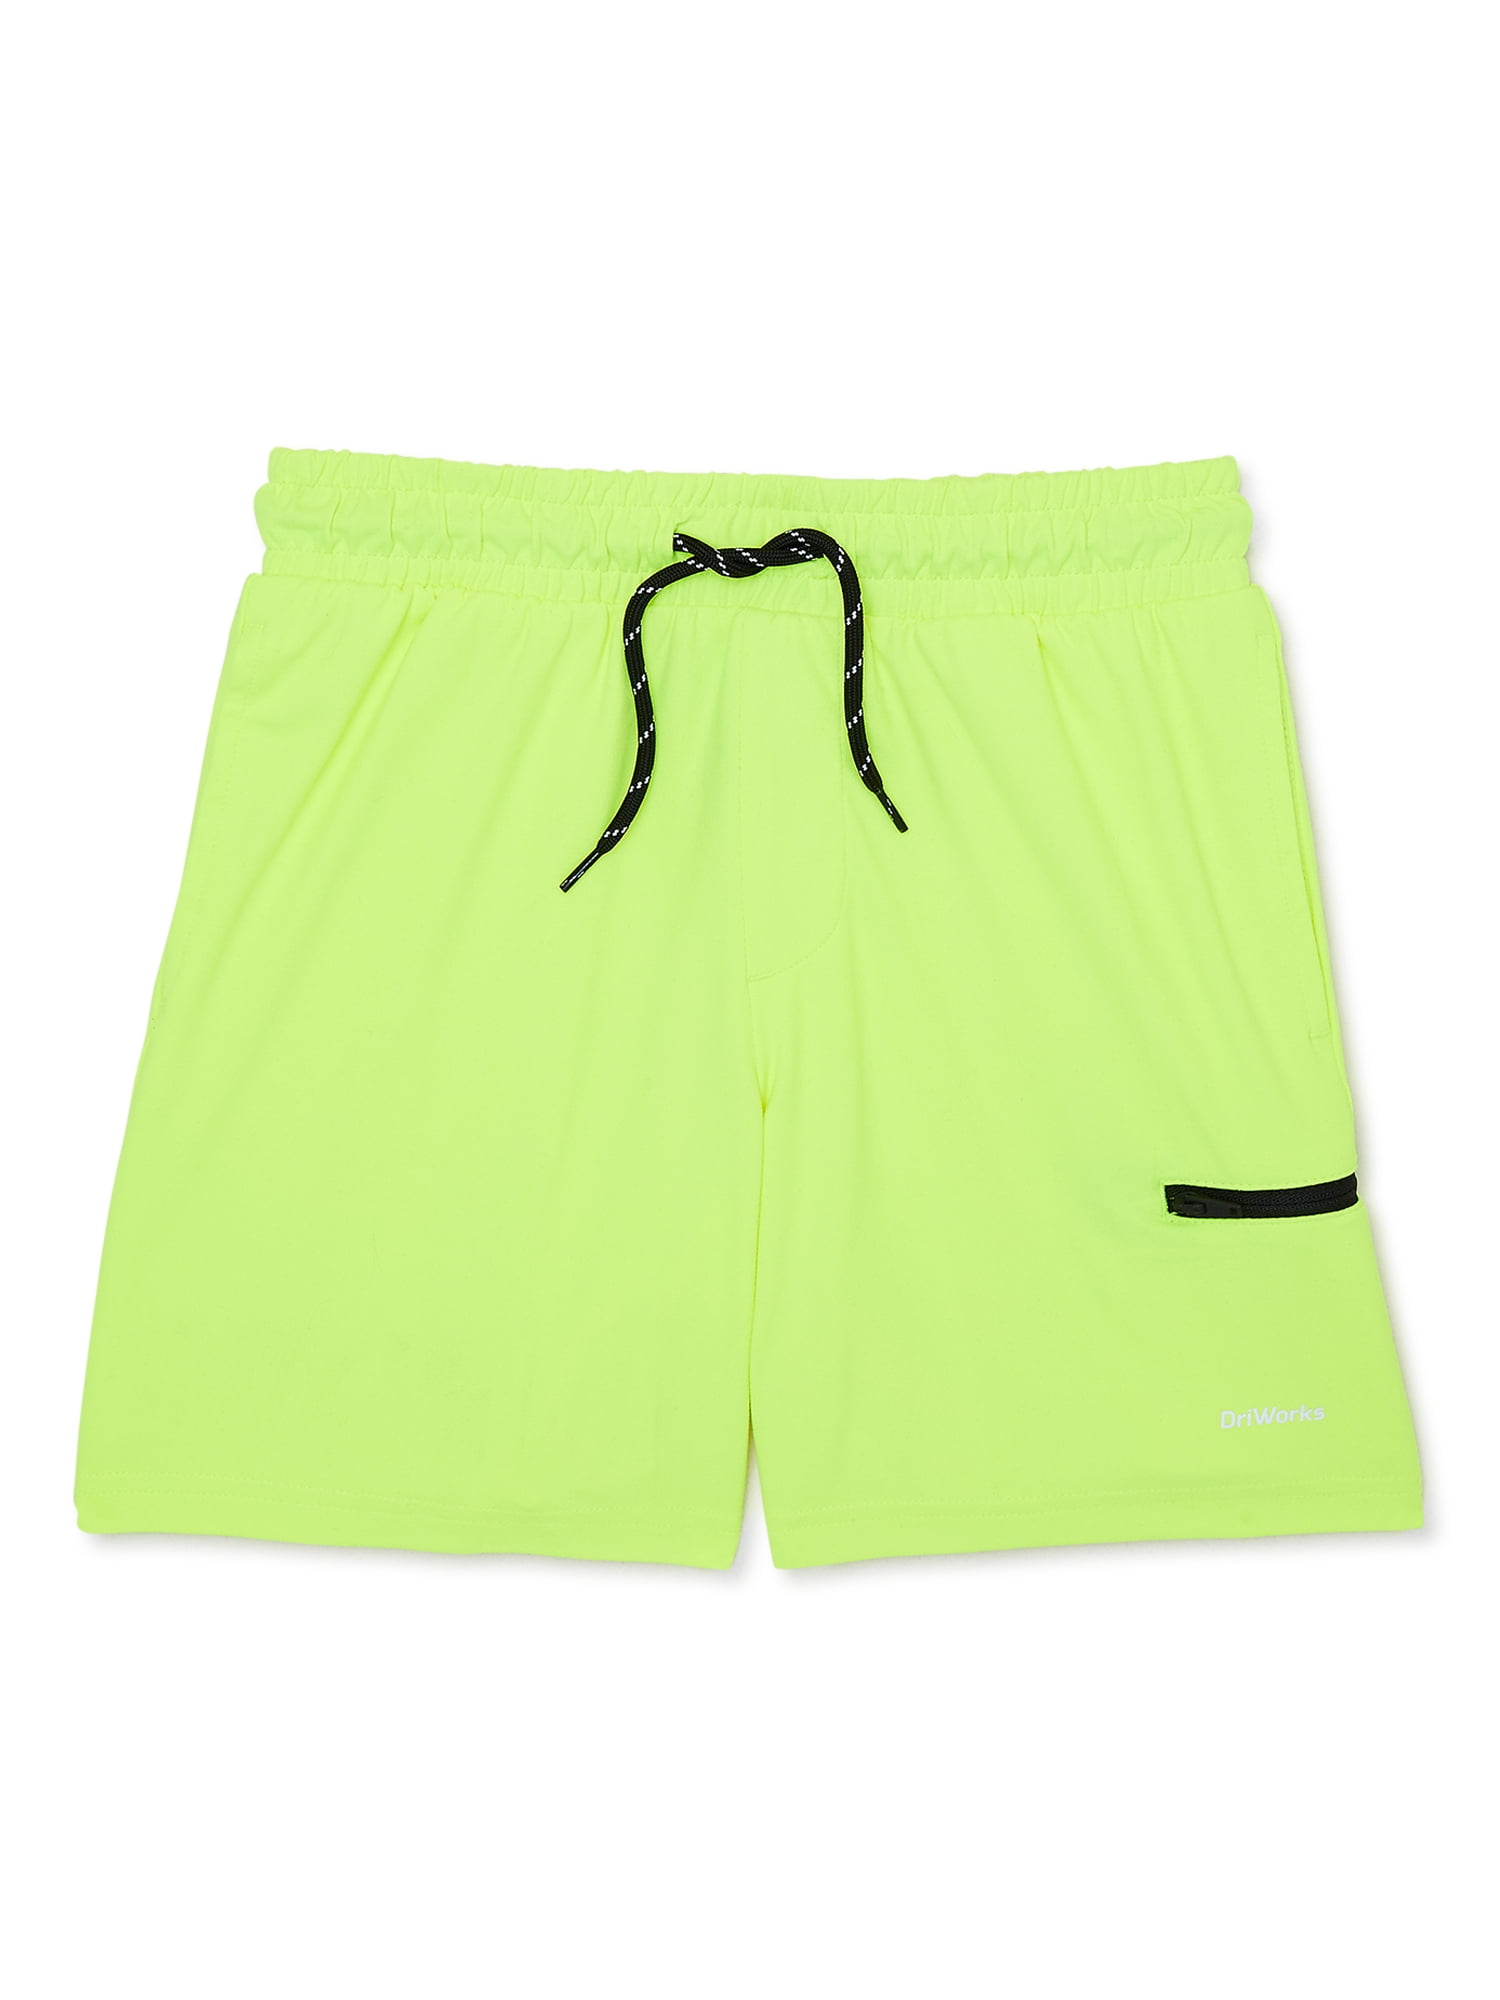 Athletic Works Boys Active Shorts, Sizes 4-18 & Husky - Walmart.com